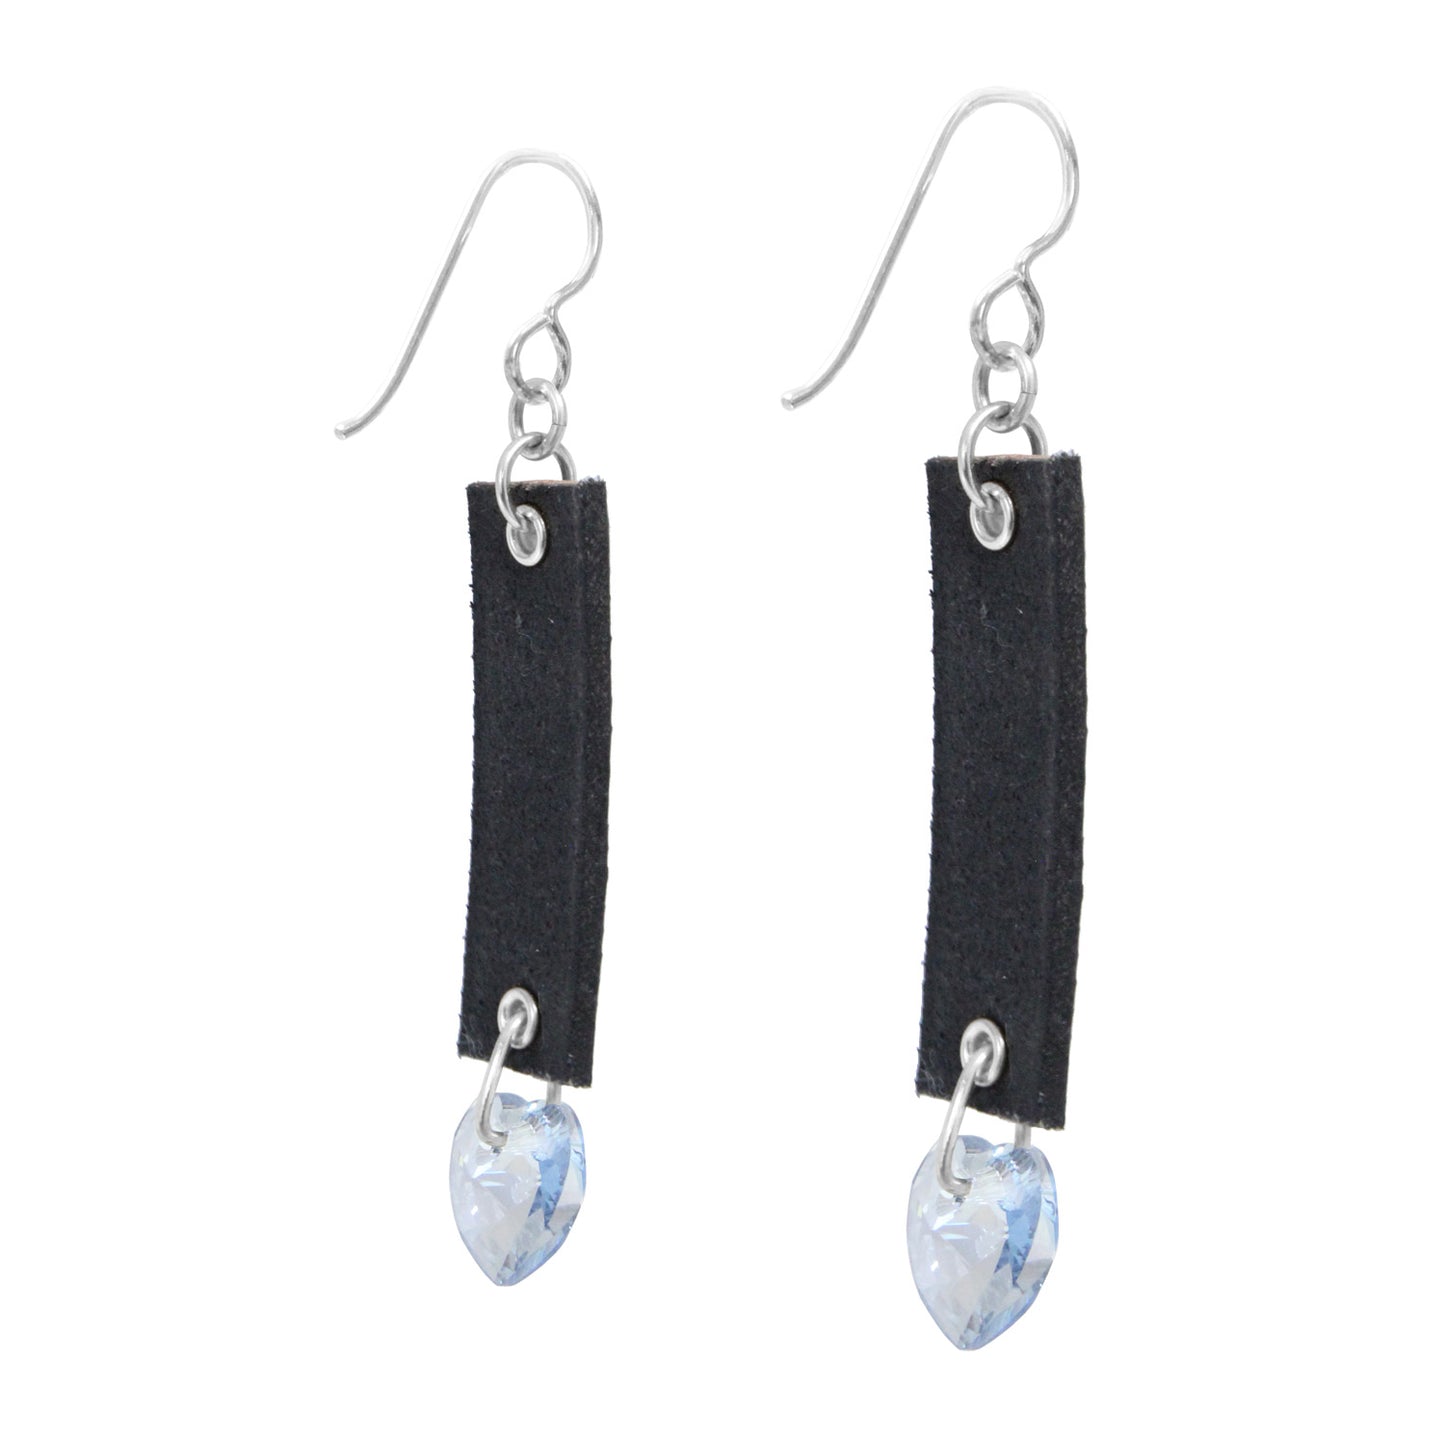 Winter LC Earrings / 60mm Length / crystal heart / sterling silver hook earwires